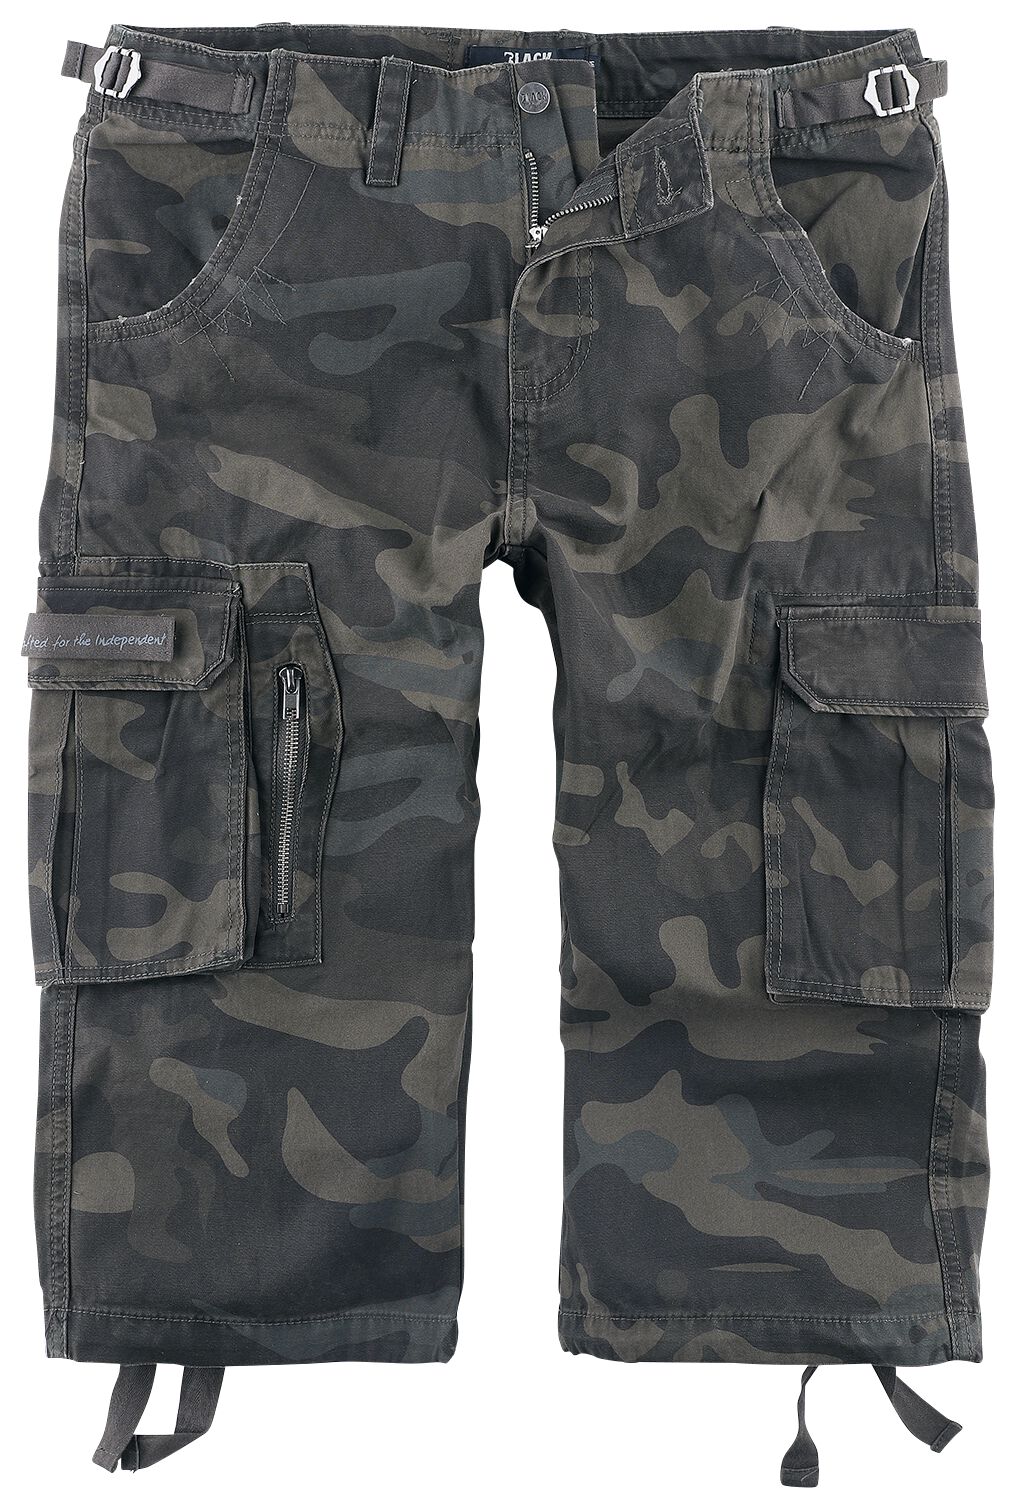 Black Premium by EMP 3/4 Army Vintage Shorts Short darkcamo in 4XL